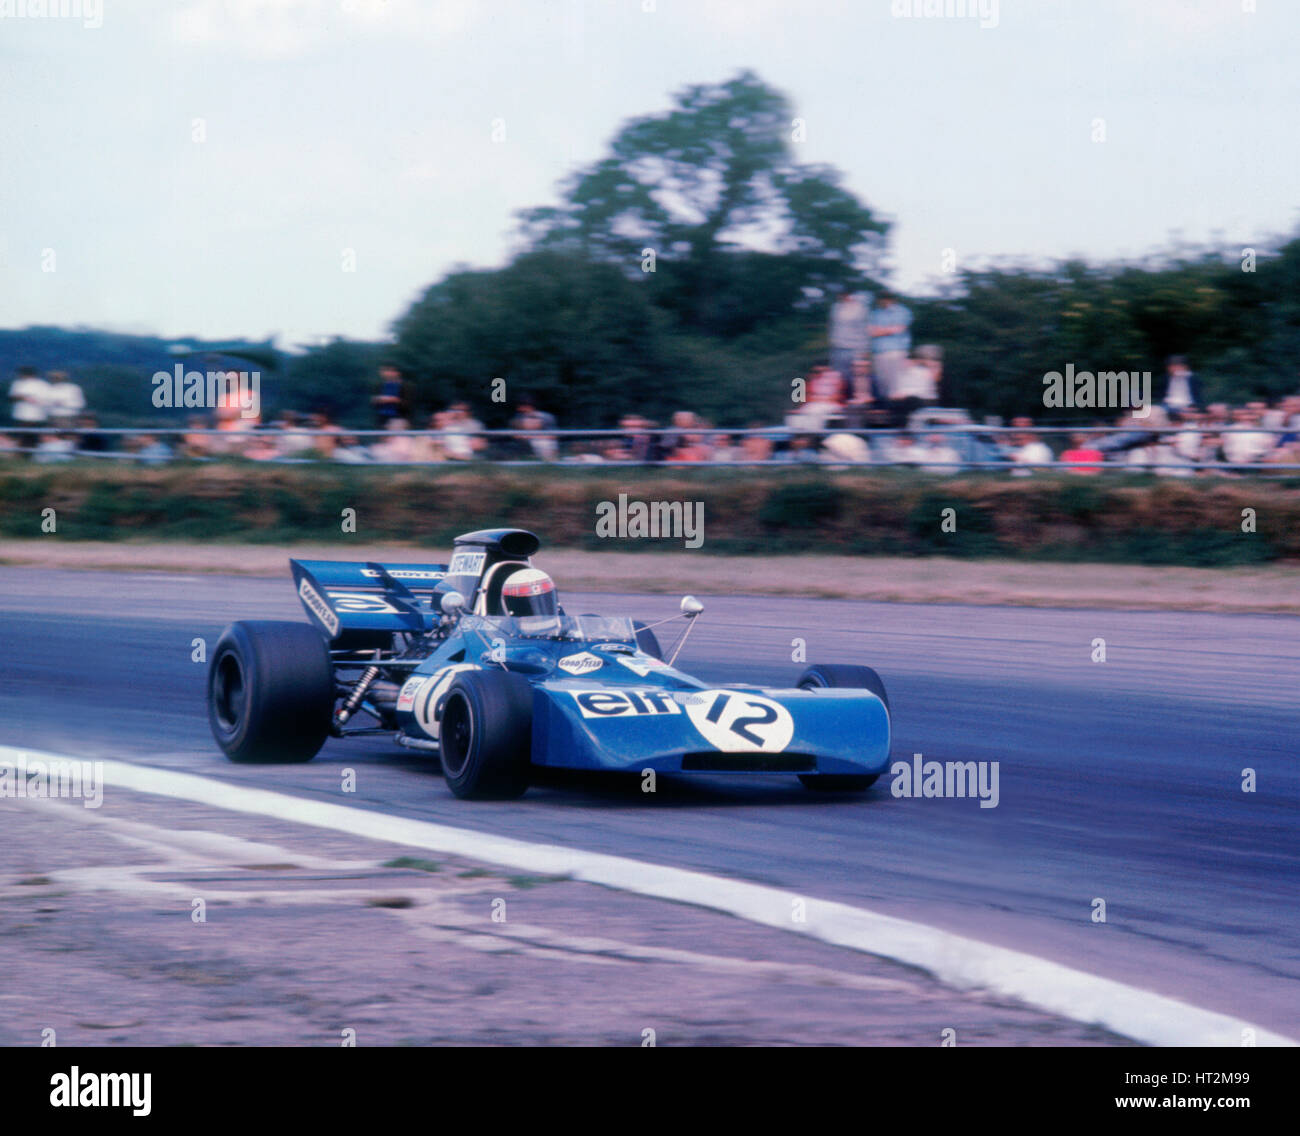 Tyrrell 003 azionato da Jackie Stewart nel 1971 British GP. Artista: sconosciuto. Foto Stock